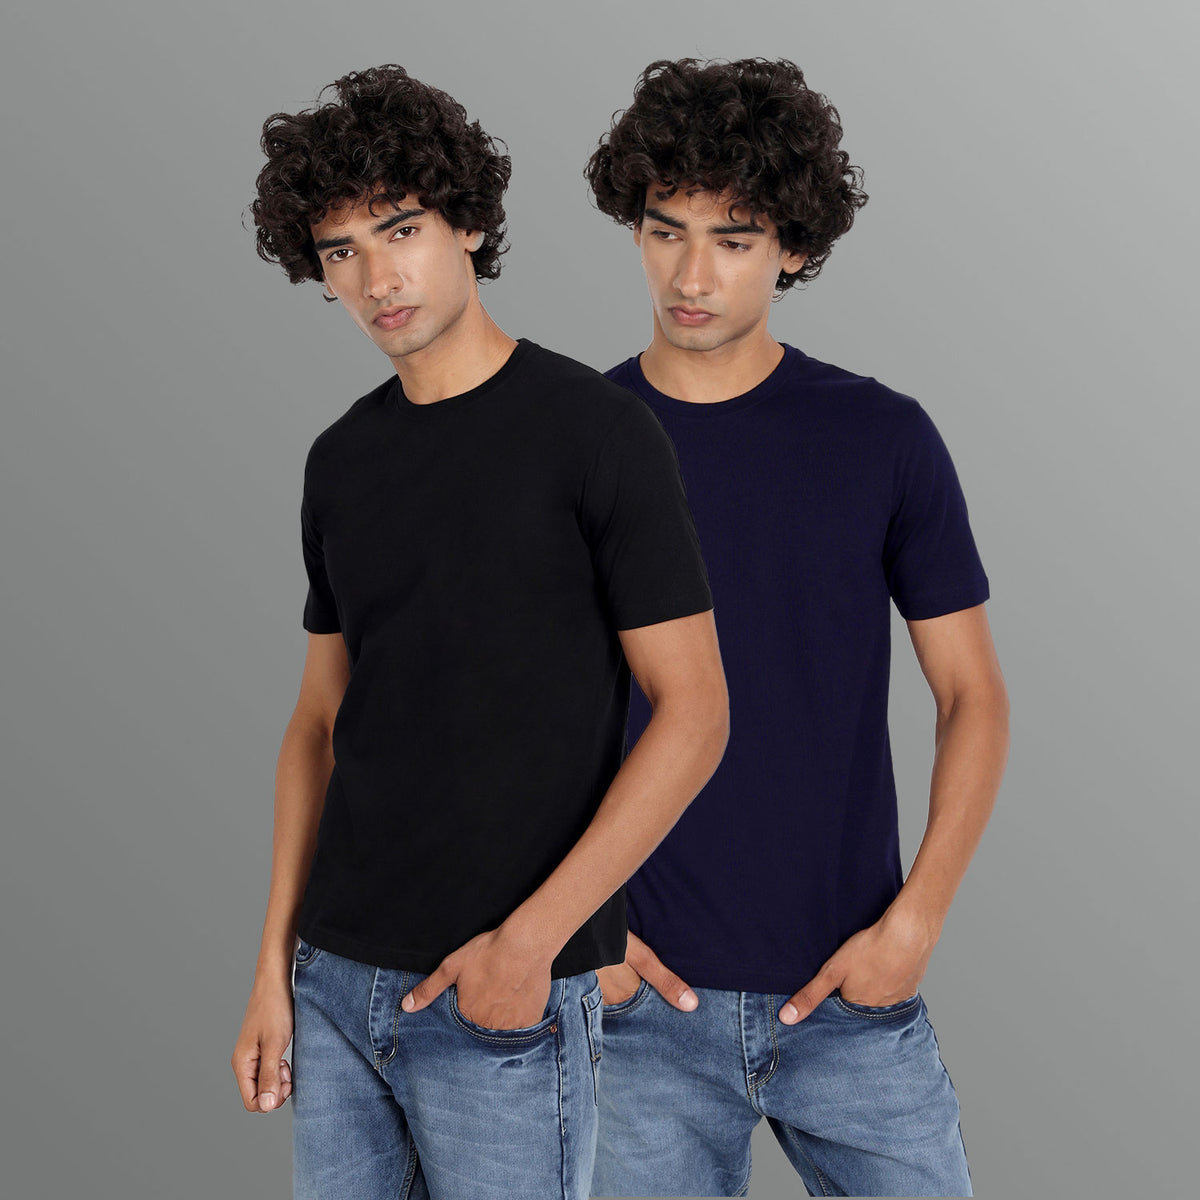 Plain T-shirt Combo For Men Black And Blue